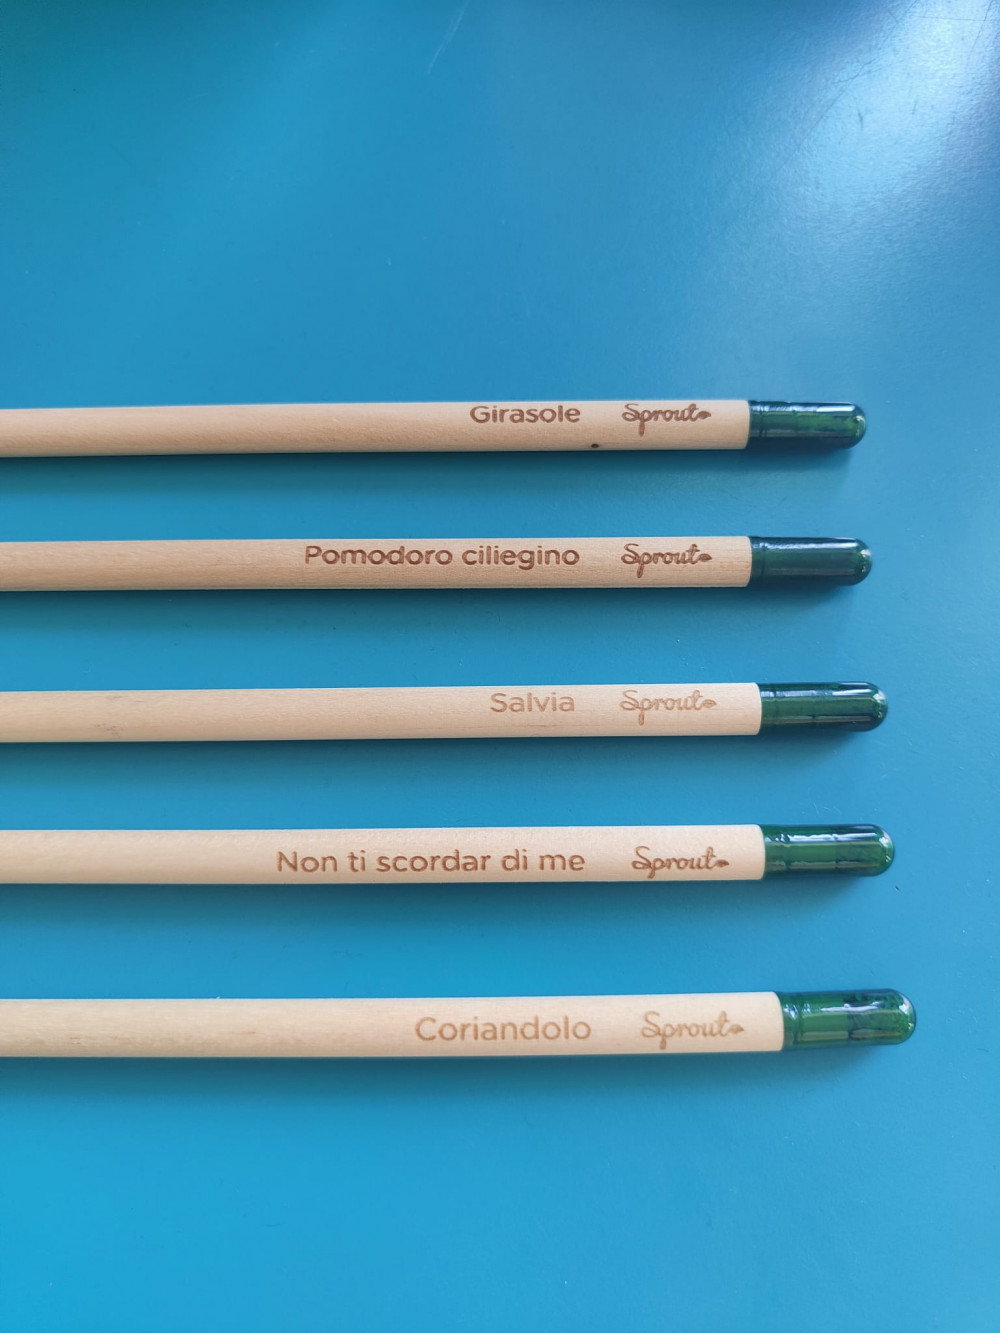 Ecological pencil